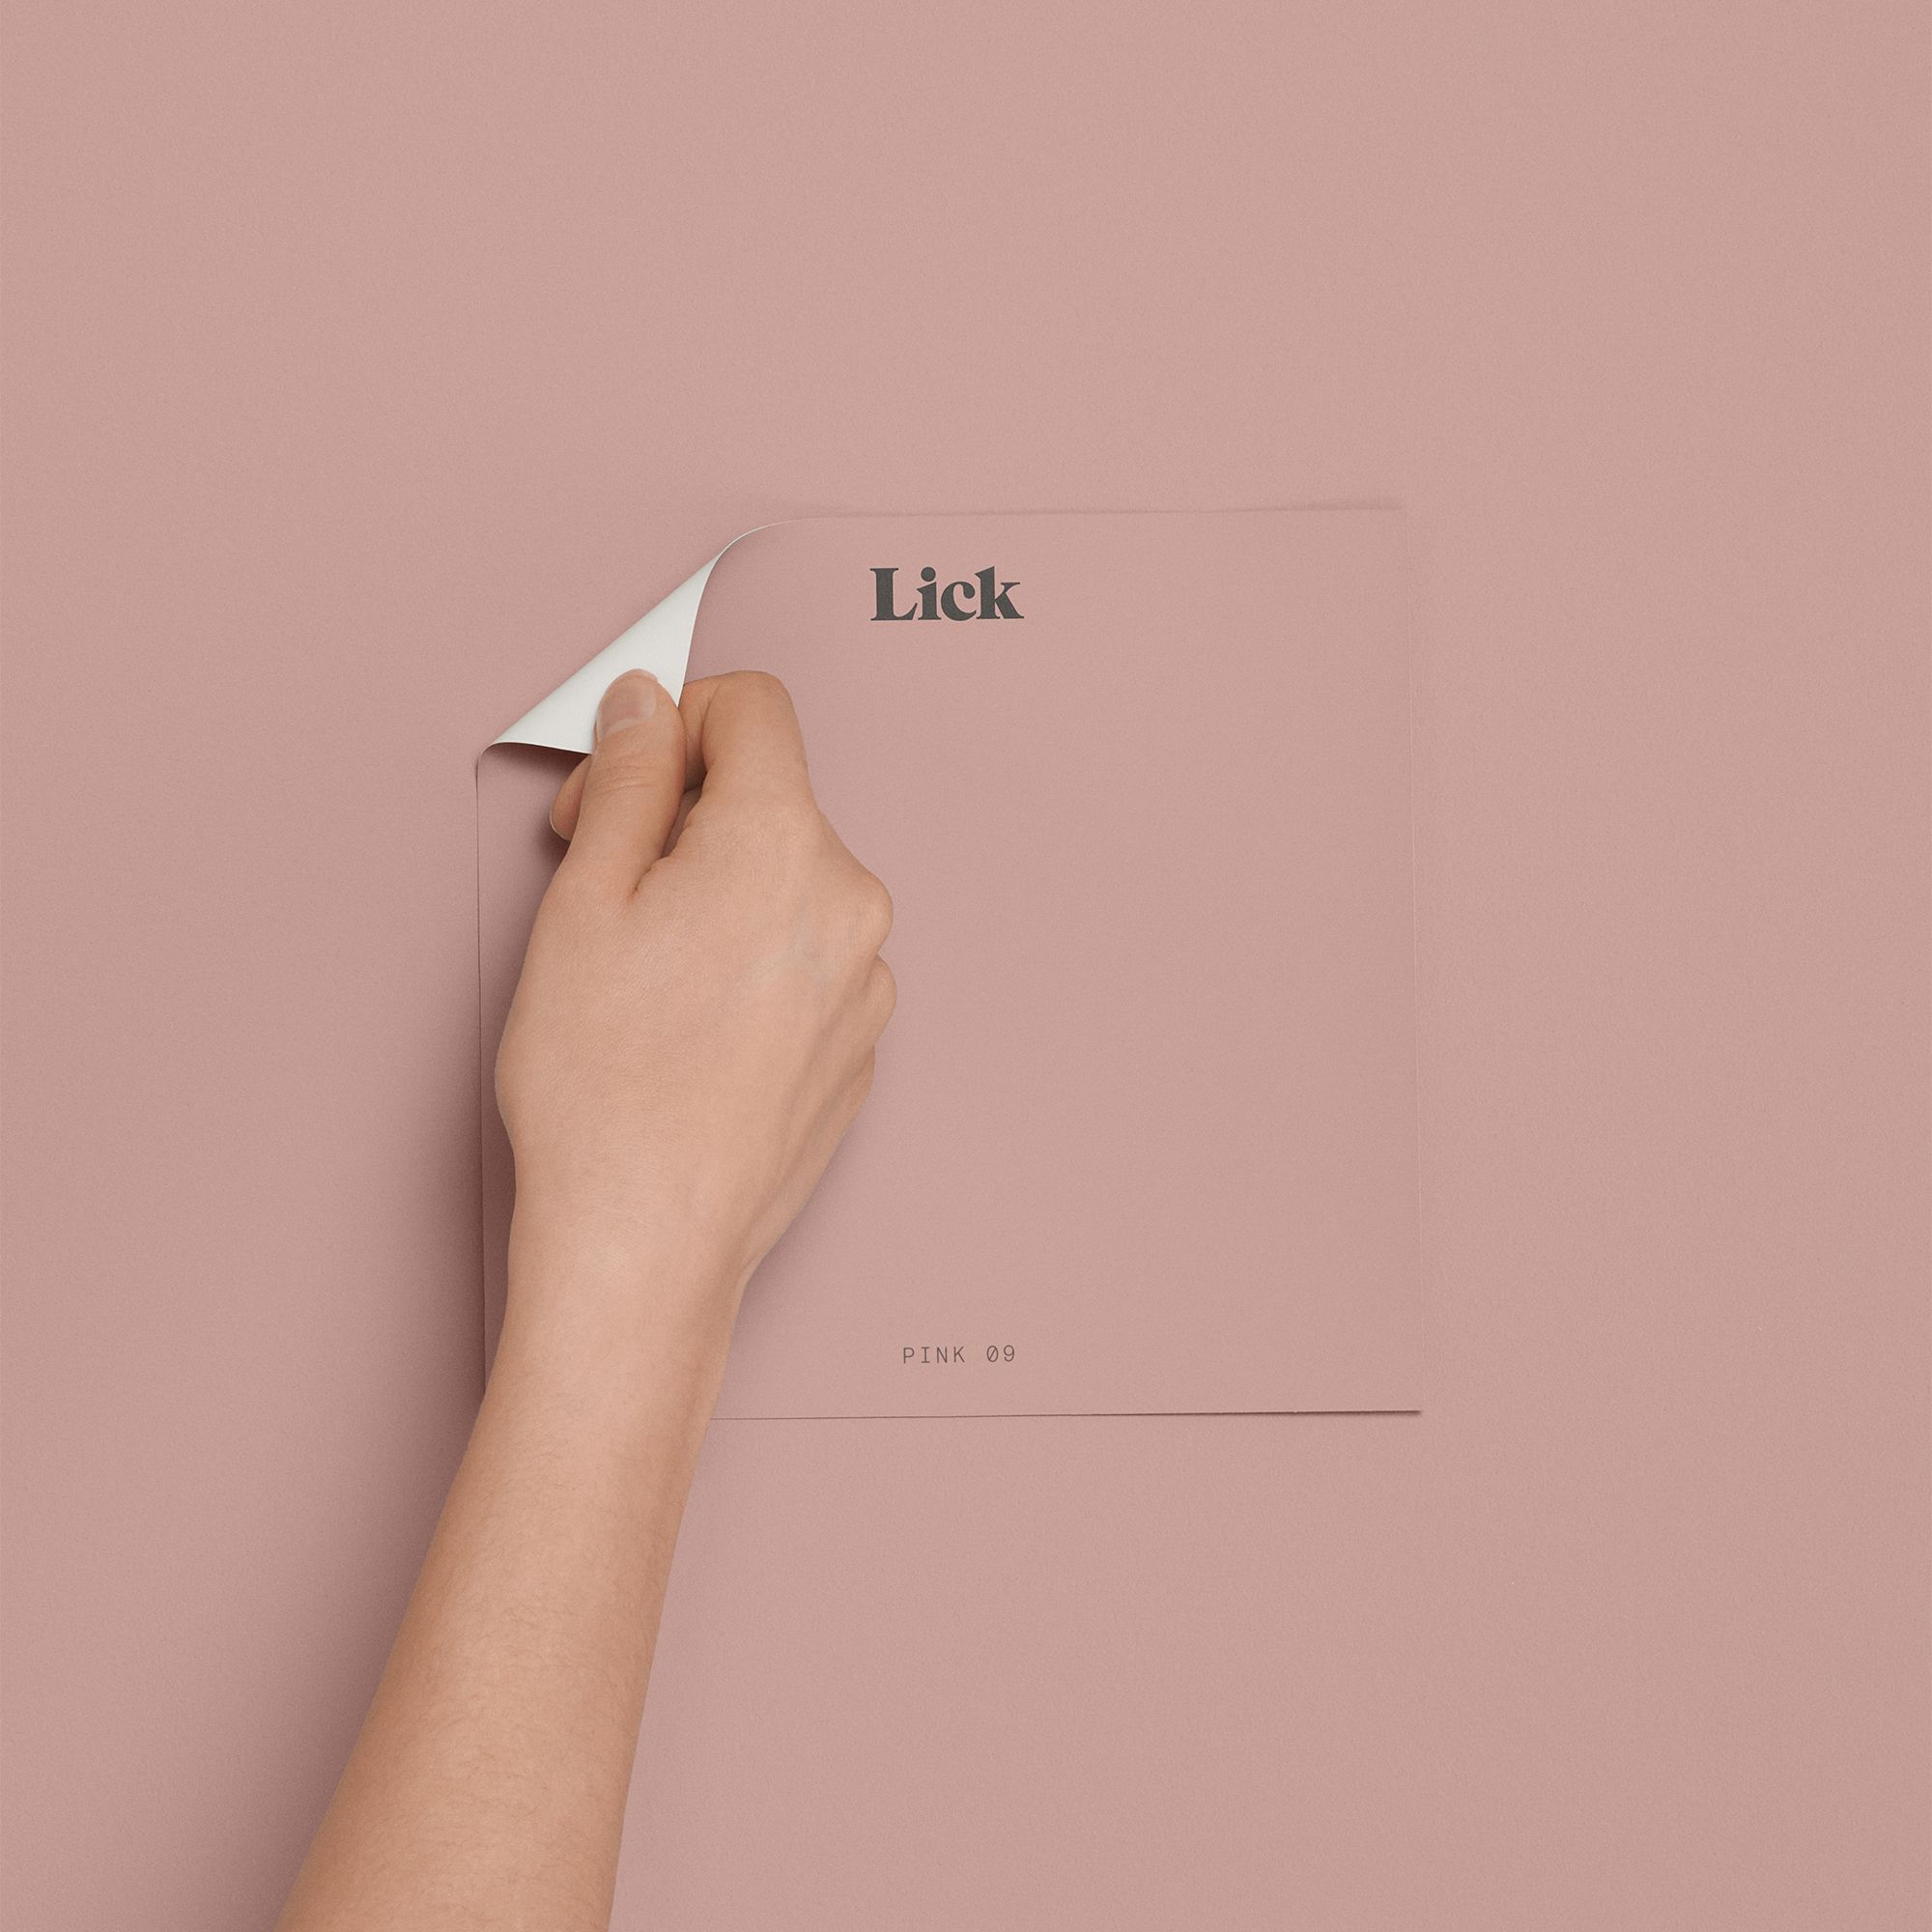 Lick Pink 09 Peel & stick Tester